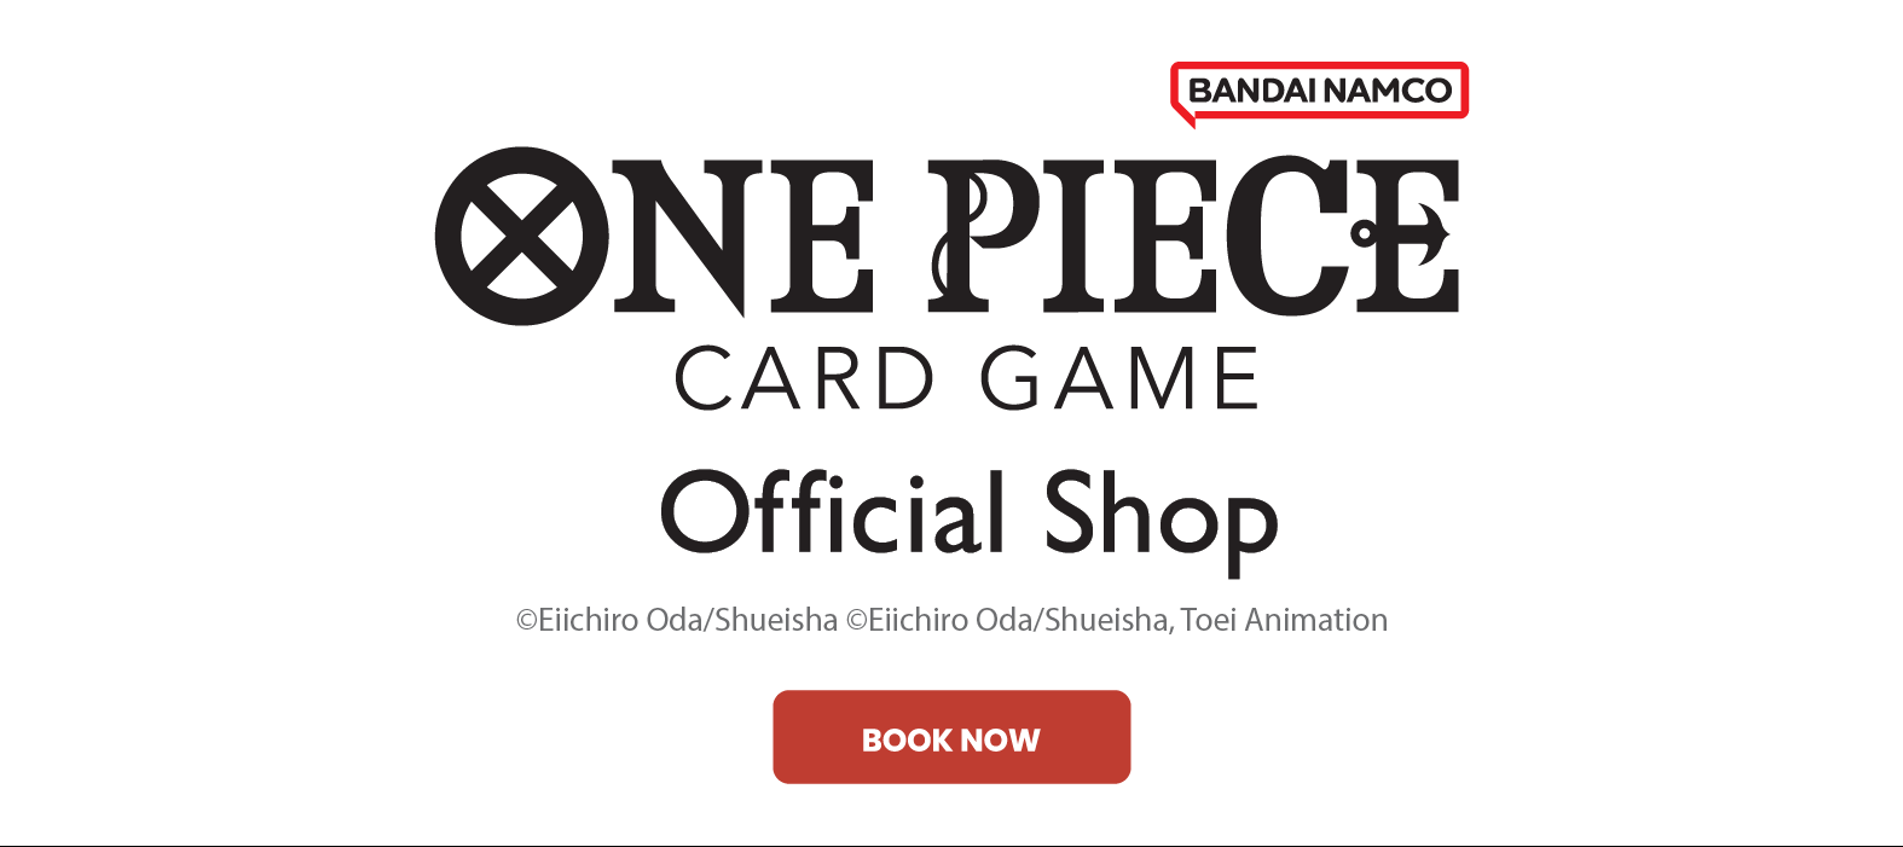 ONE PIECE CARD GAME | Bandai Namco Cross Store